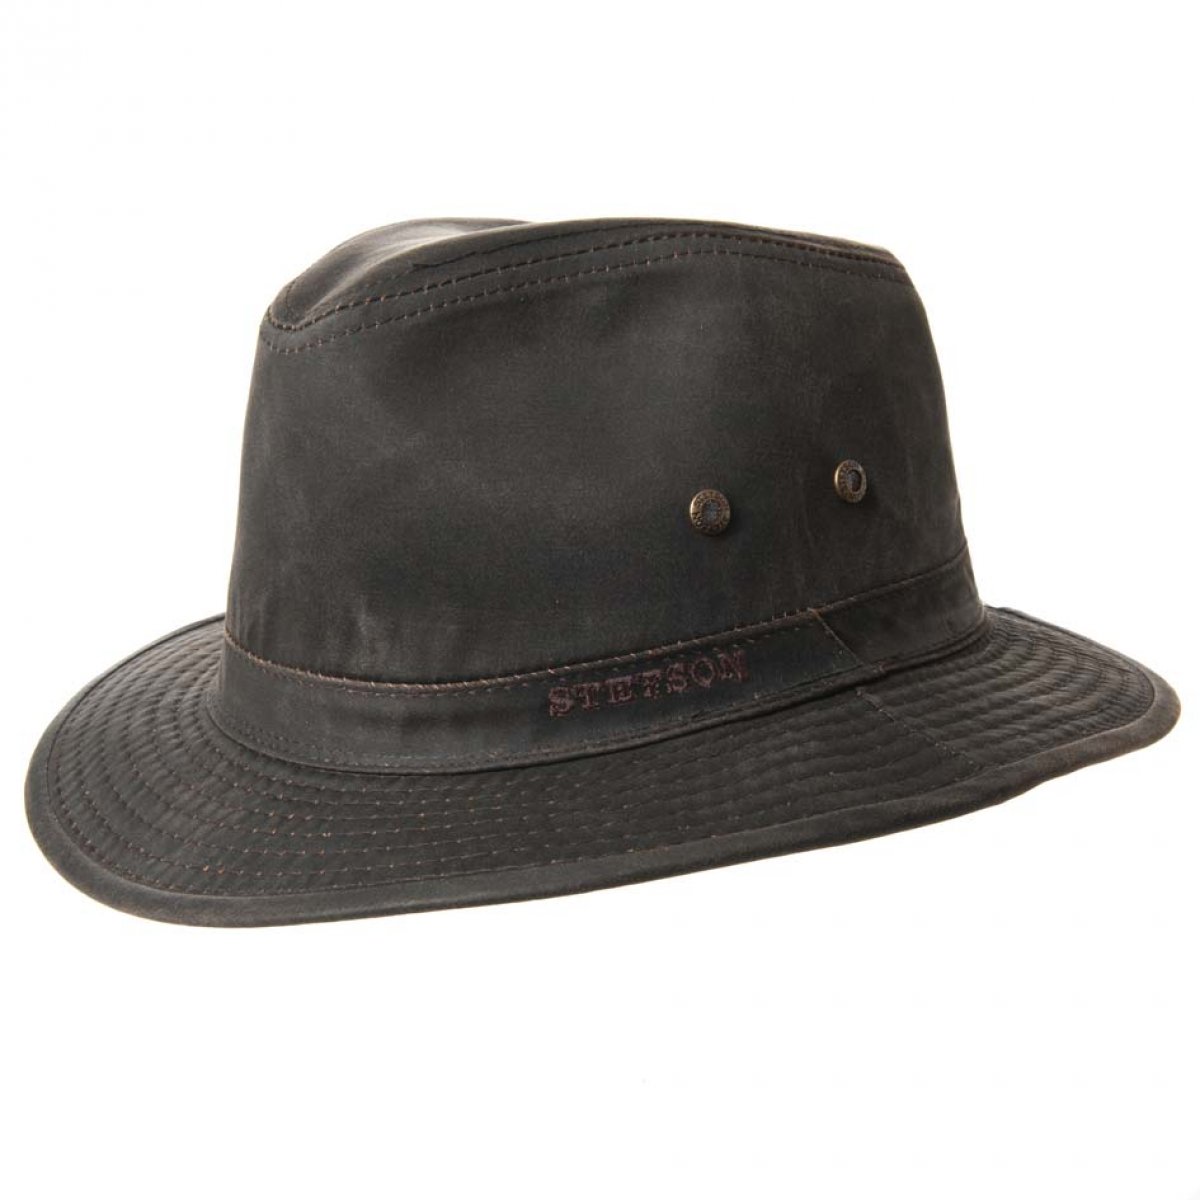 Optagelsesgebyr Materialisme Regulering STETSON Traveller hat with small brim Ava Cotton